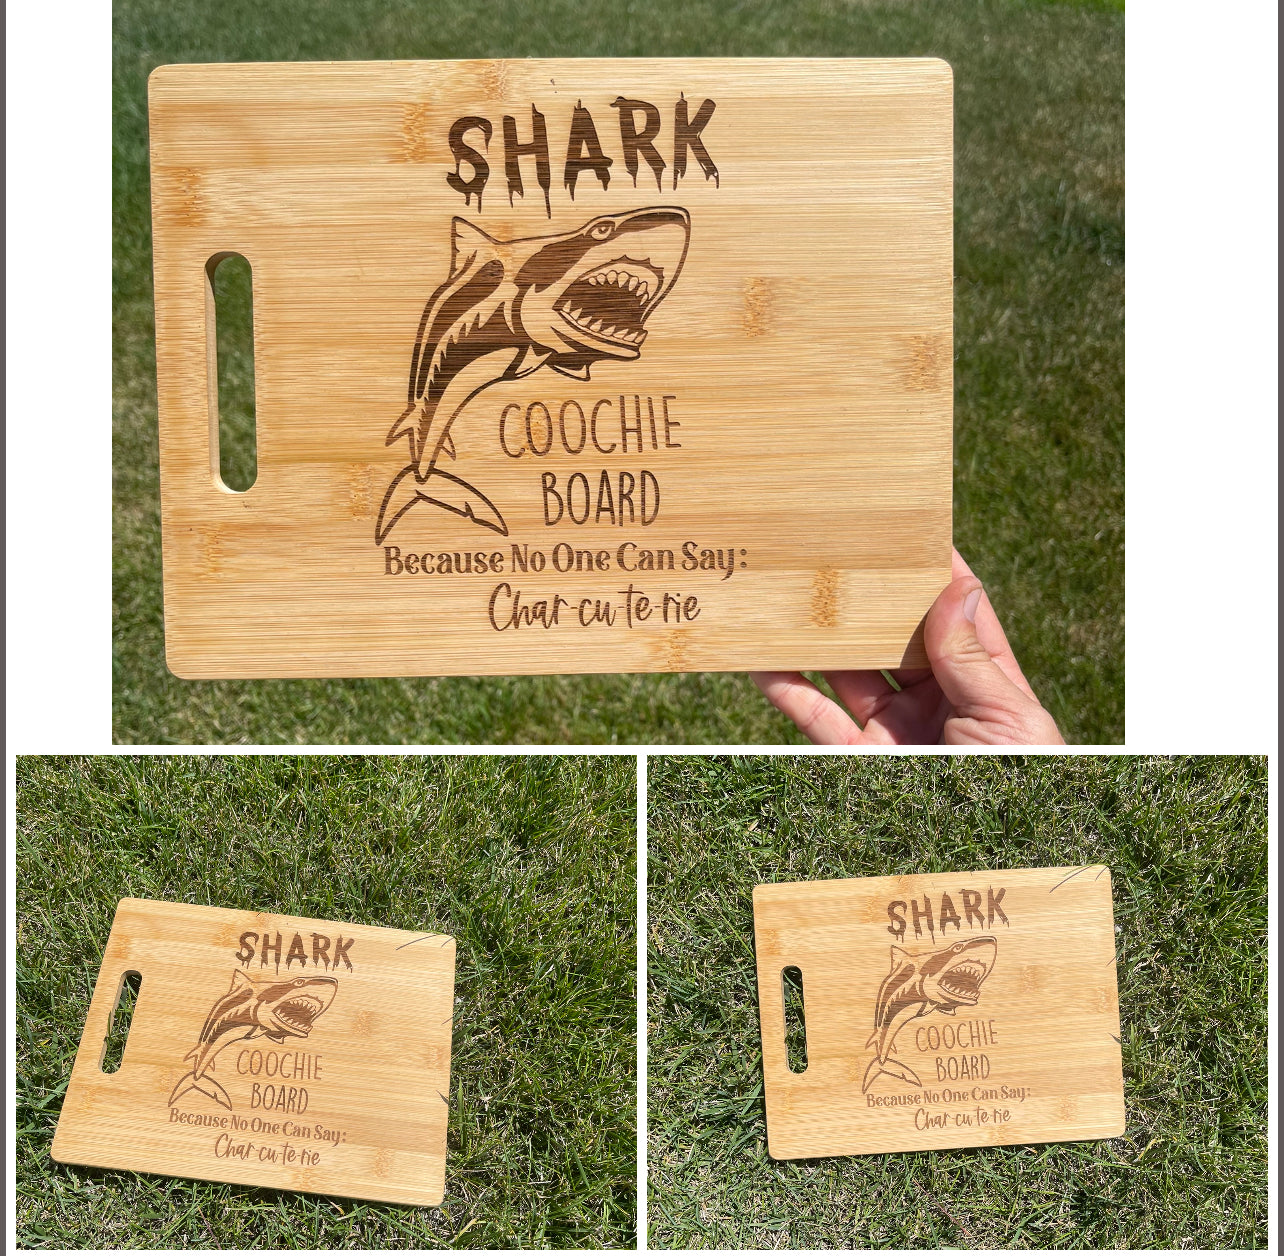 Shark coochie boards